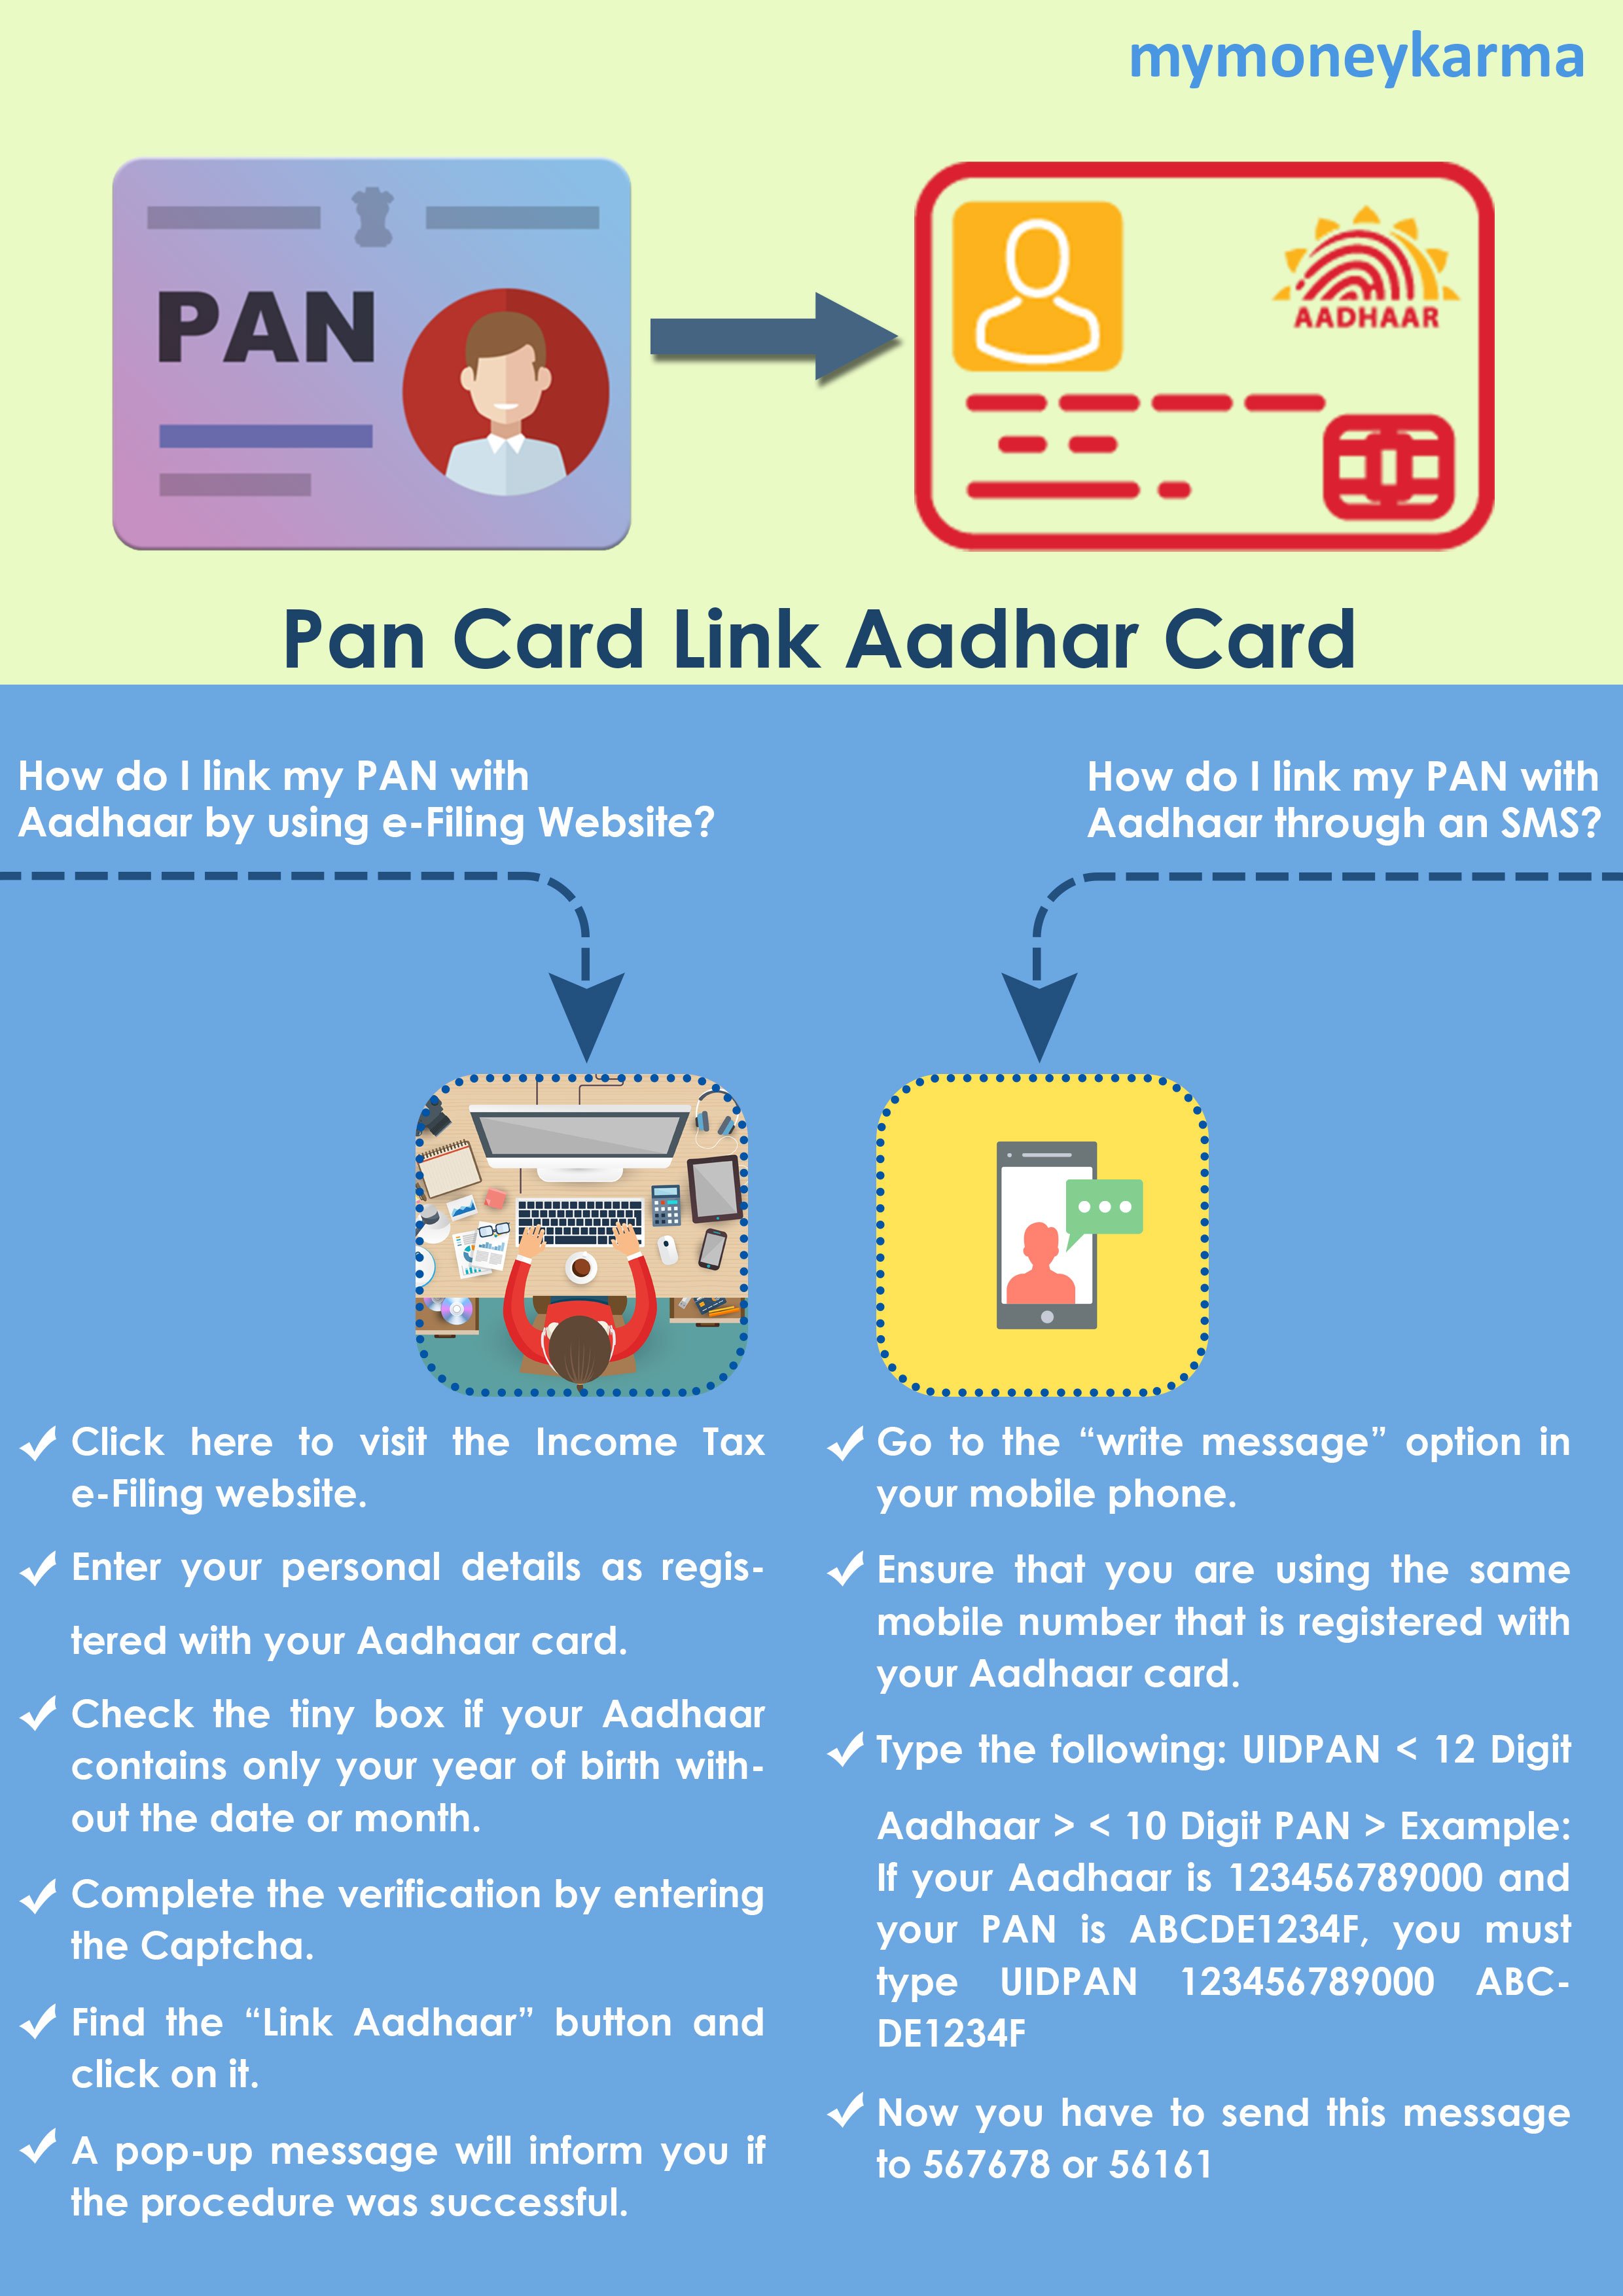 Pan Card Link Aadhaar Card